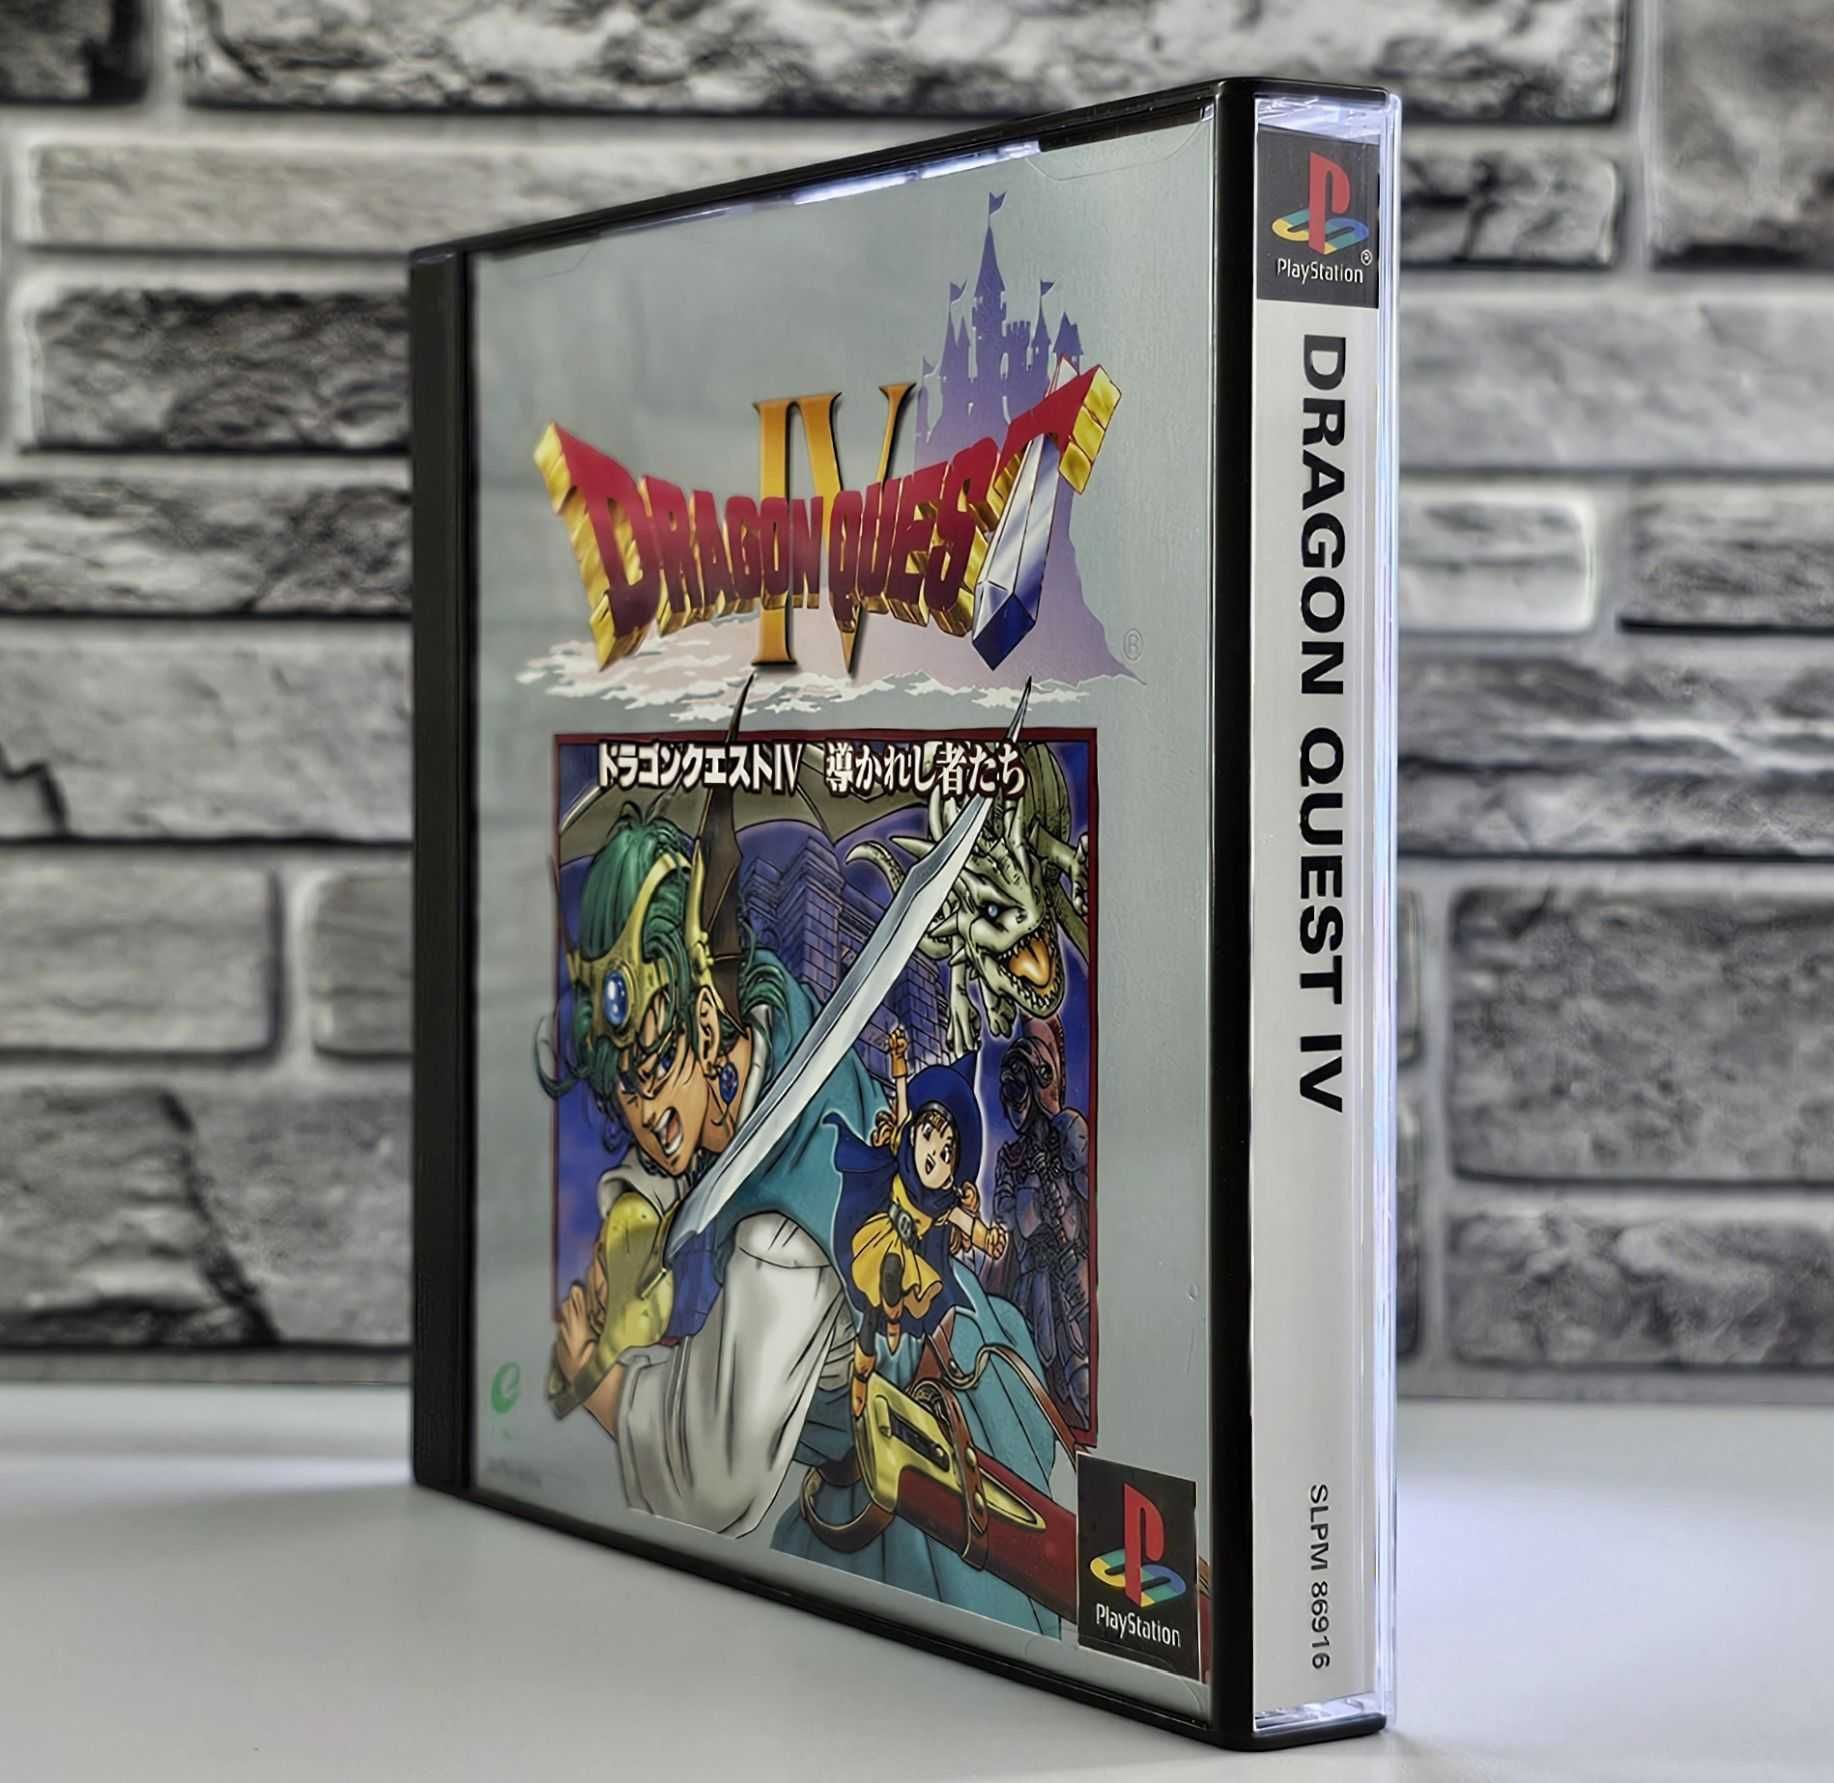 Dragon Quest IV - Michibikareshi Monotachi